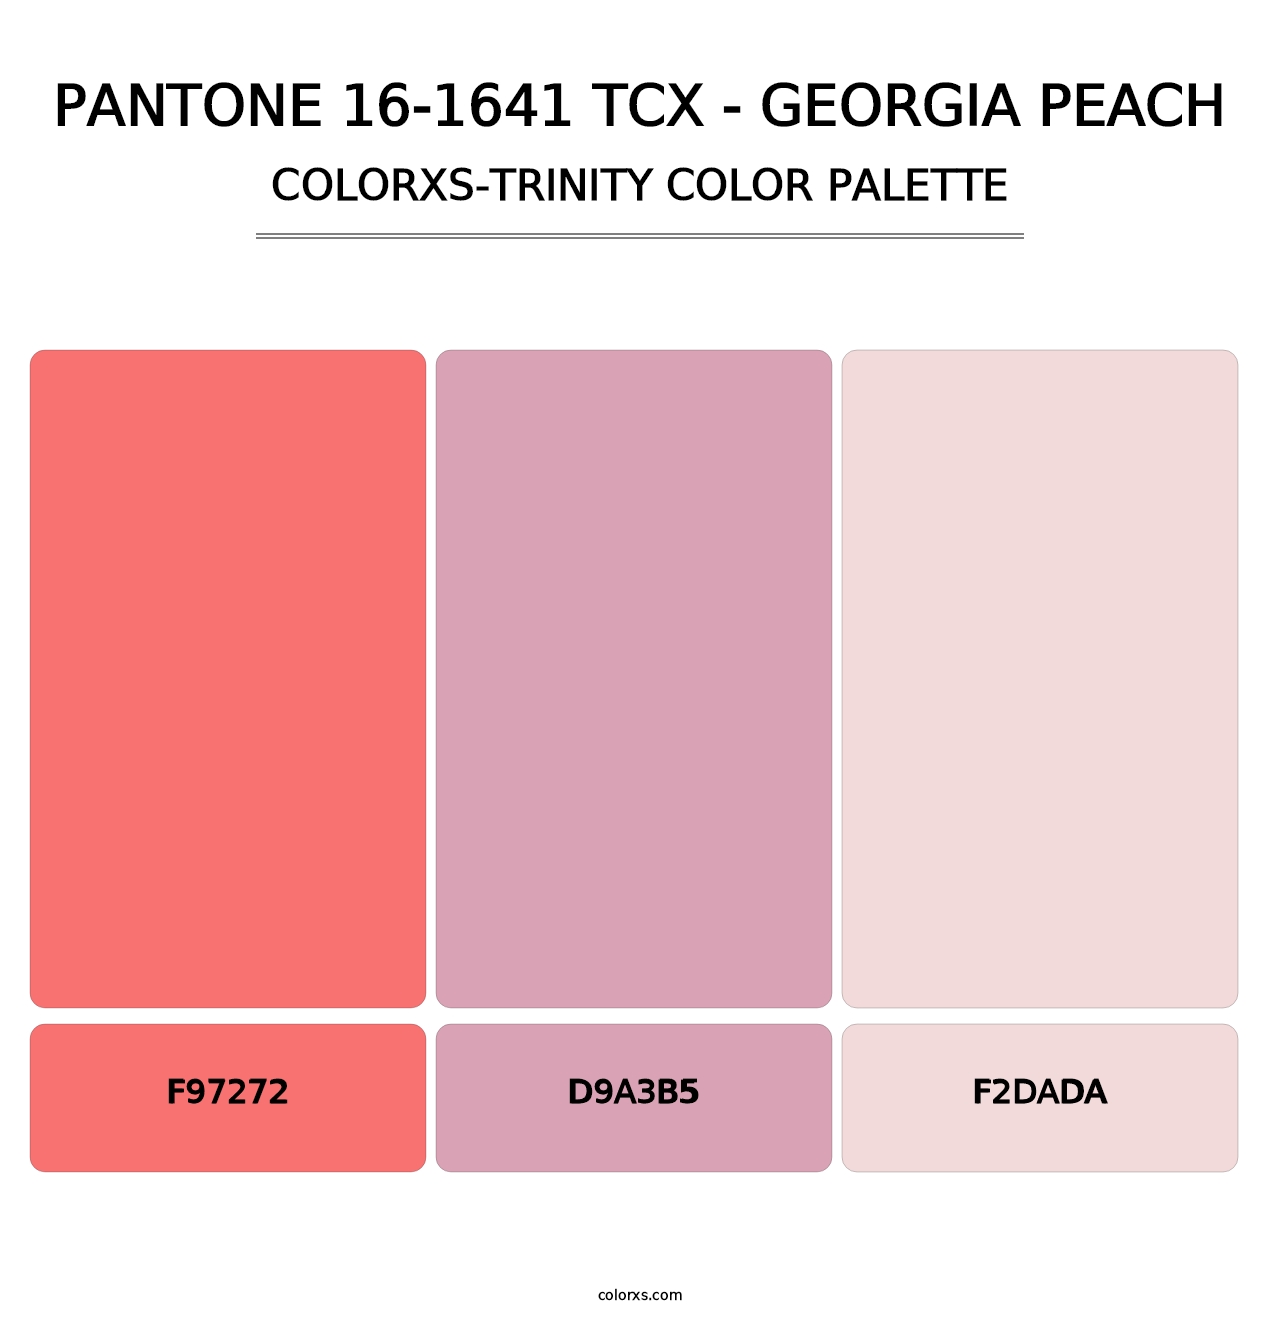 PANTONE 16-1641 TCX - Georgia Peach - Colorxs Trinity Palette